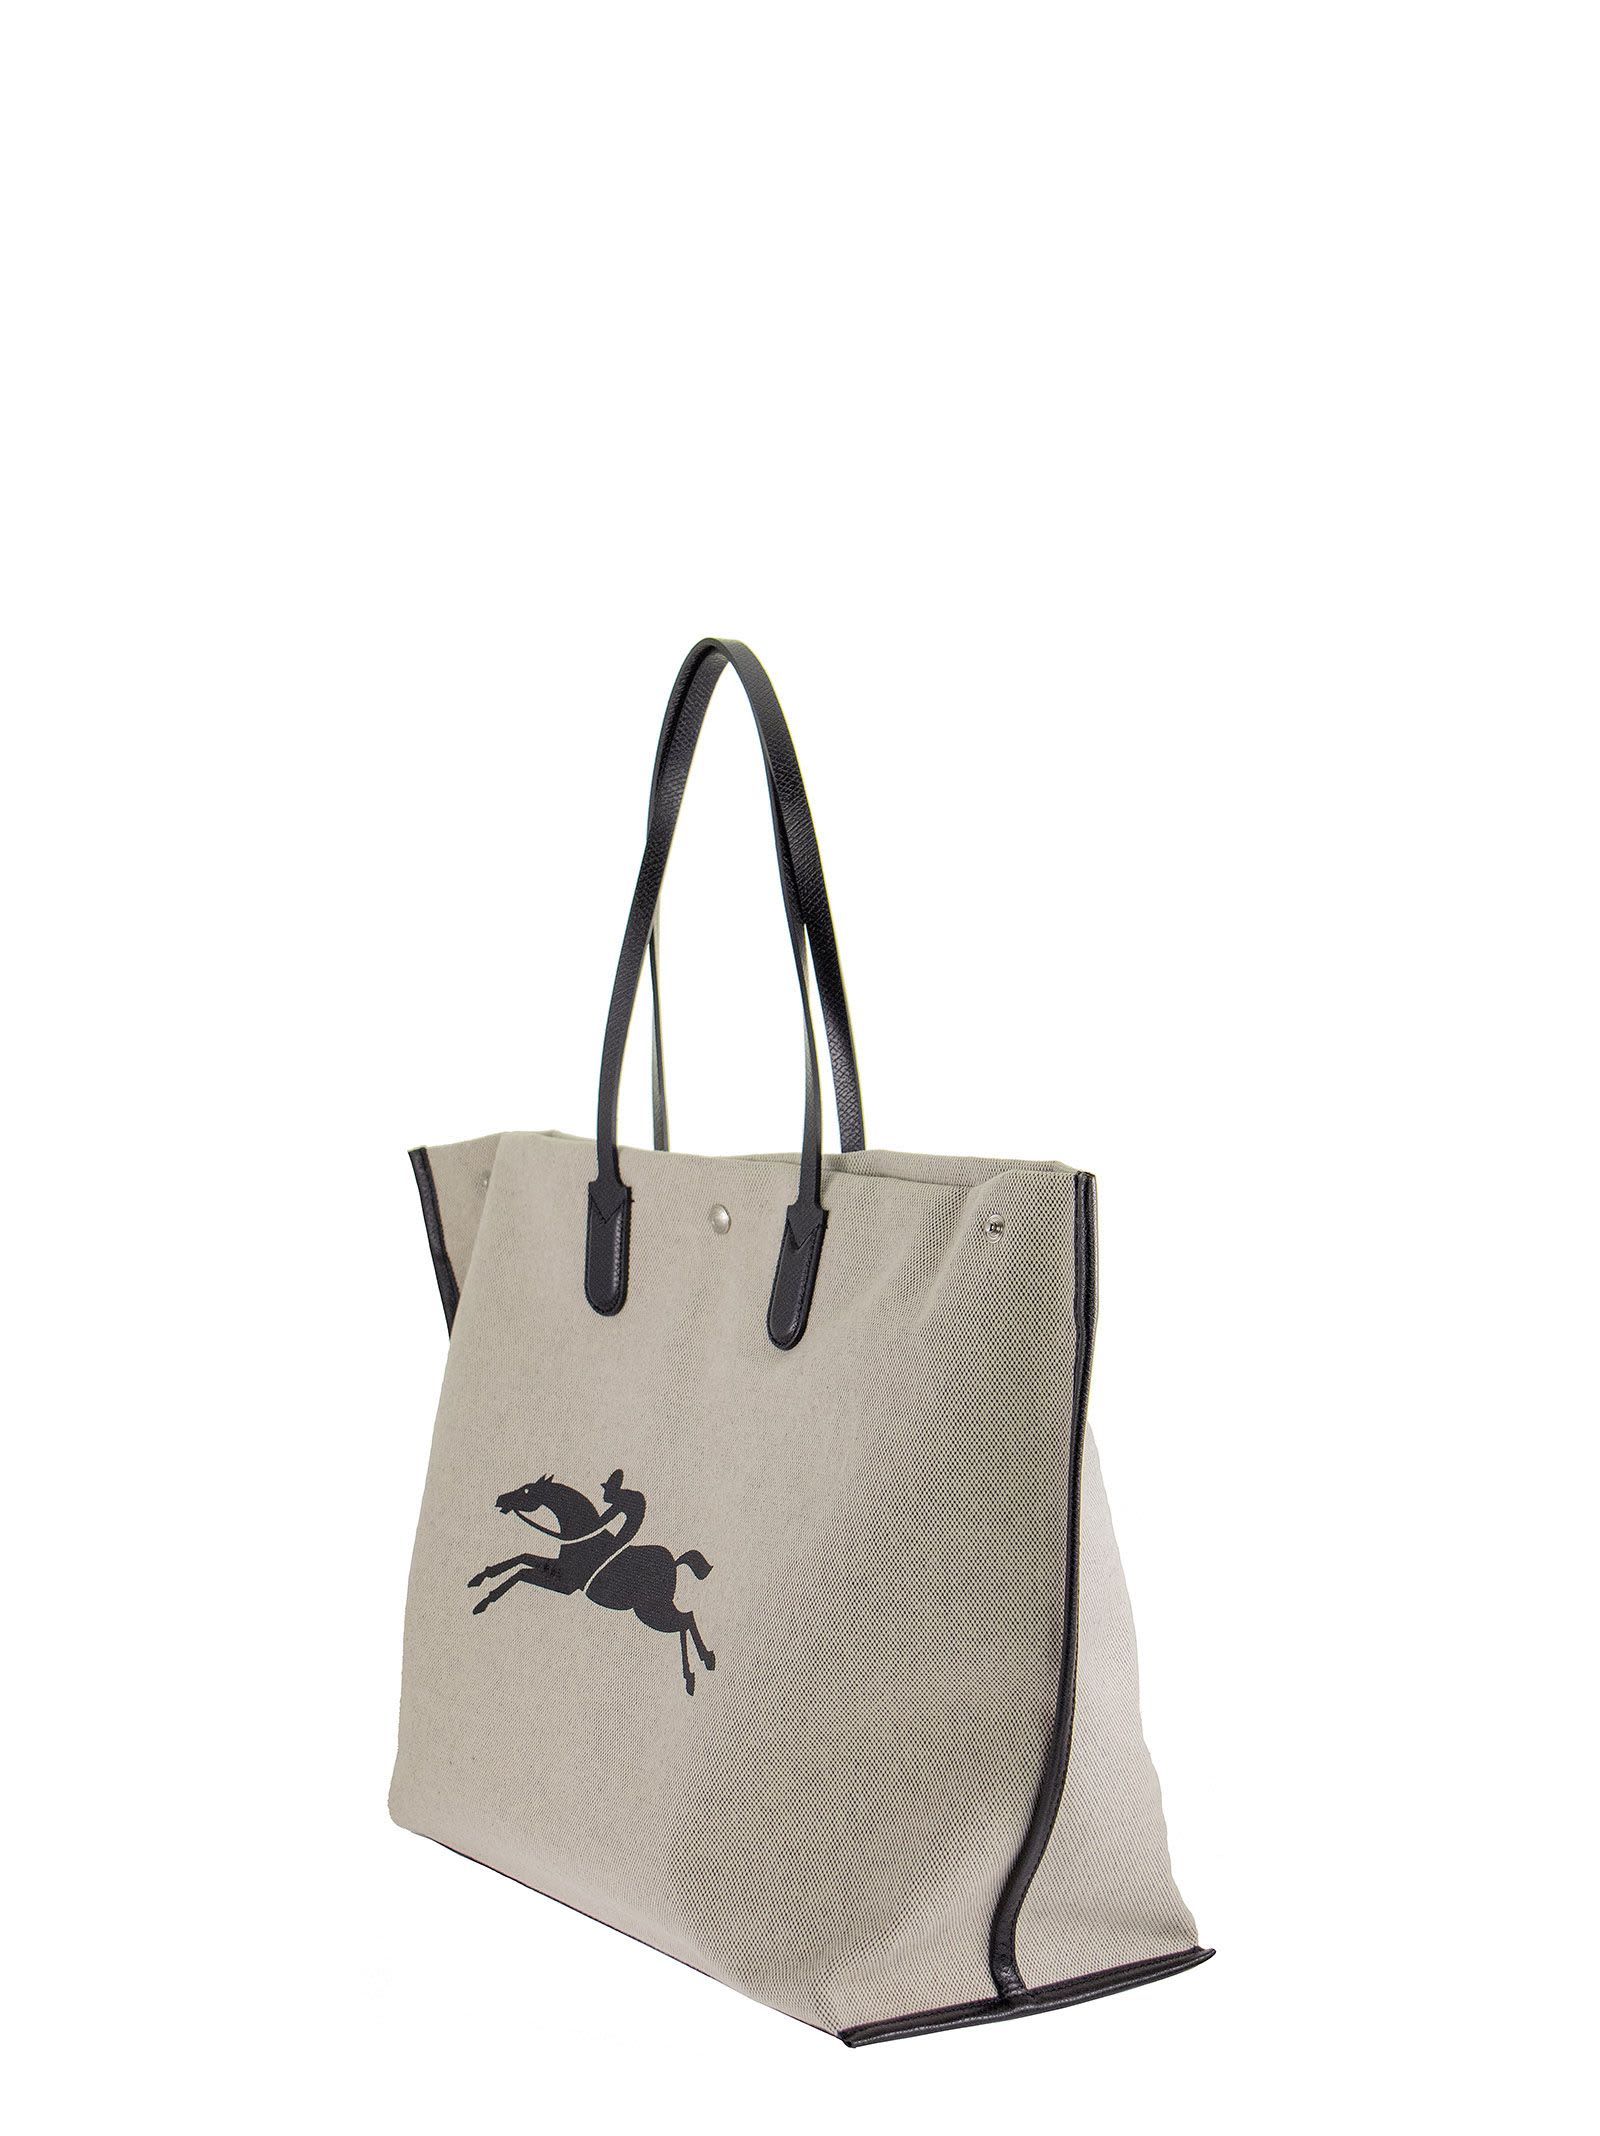 Longchamp Roseau Shopping Bag Xl | italist, ALWAYS LIKE A SALE